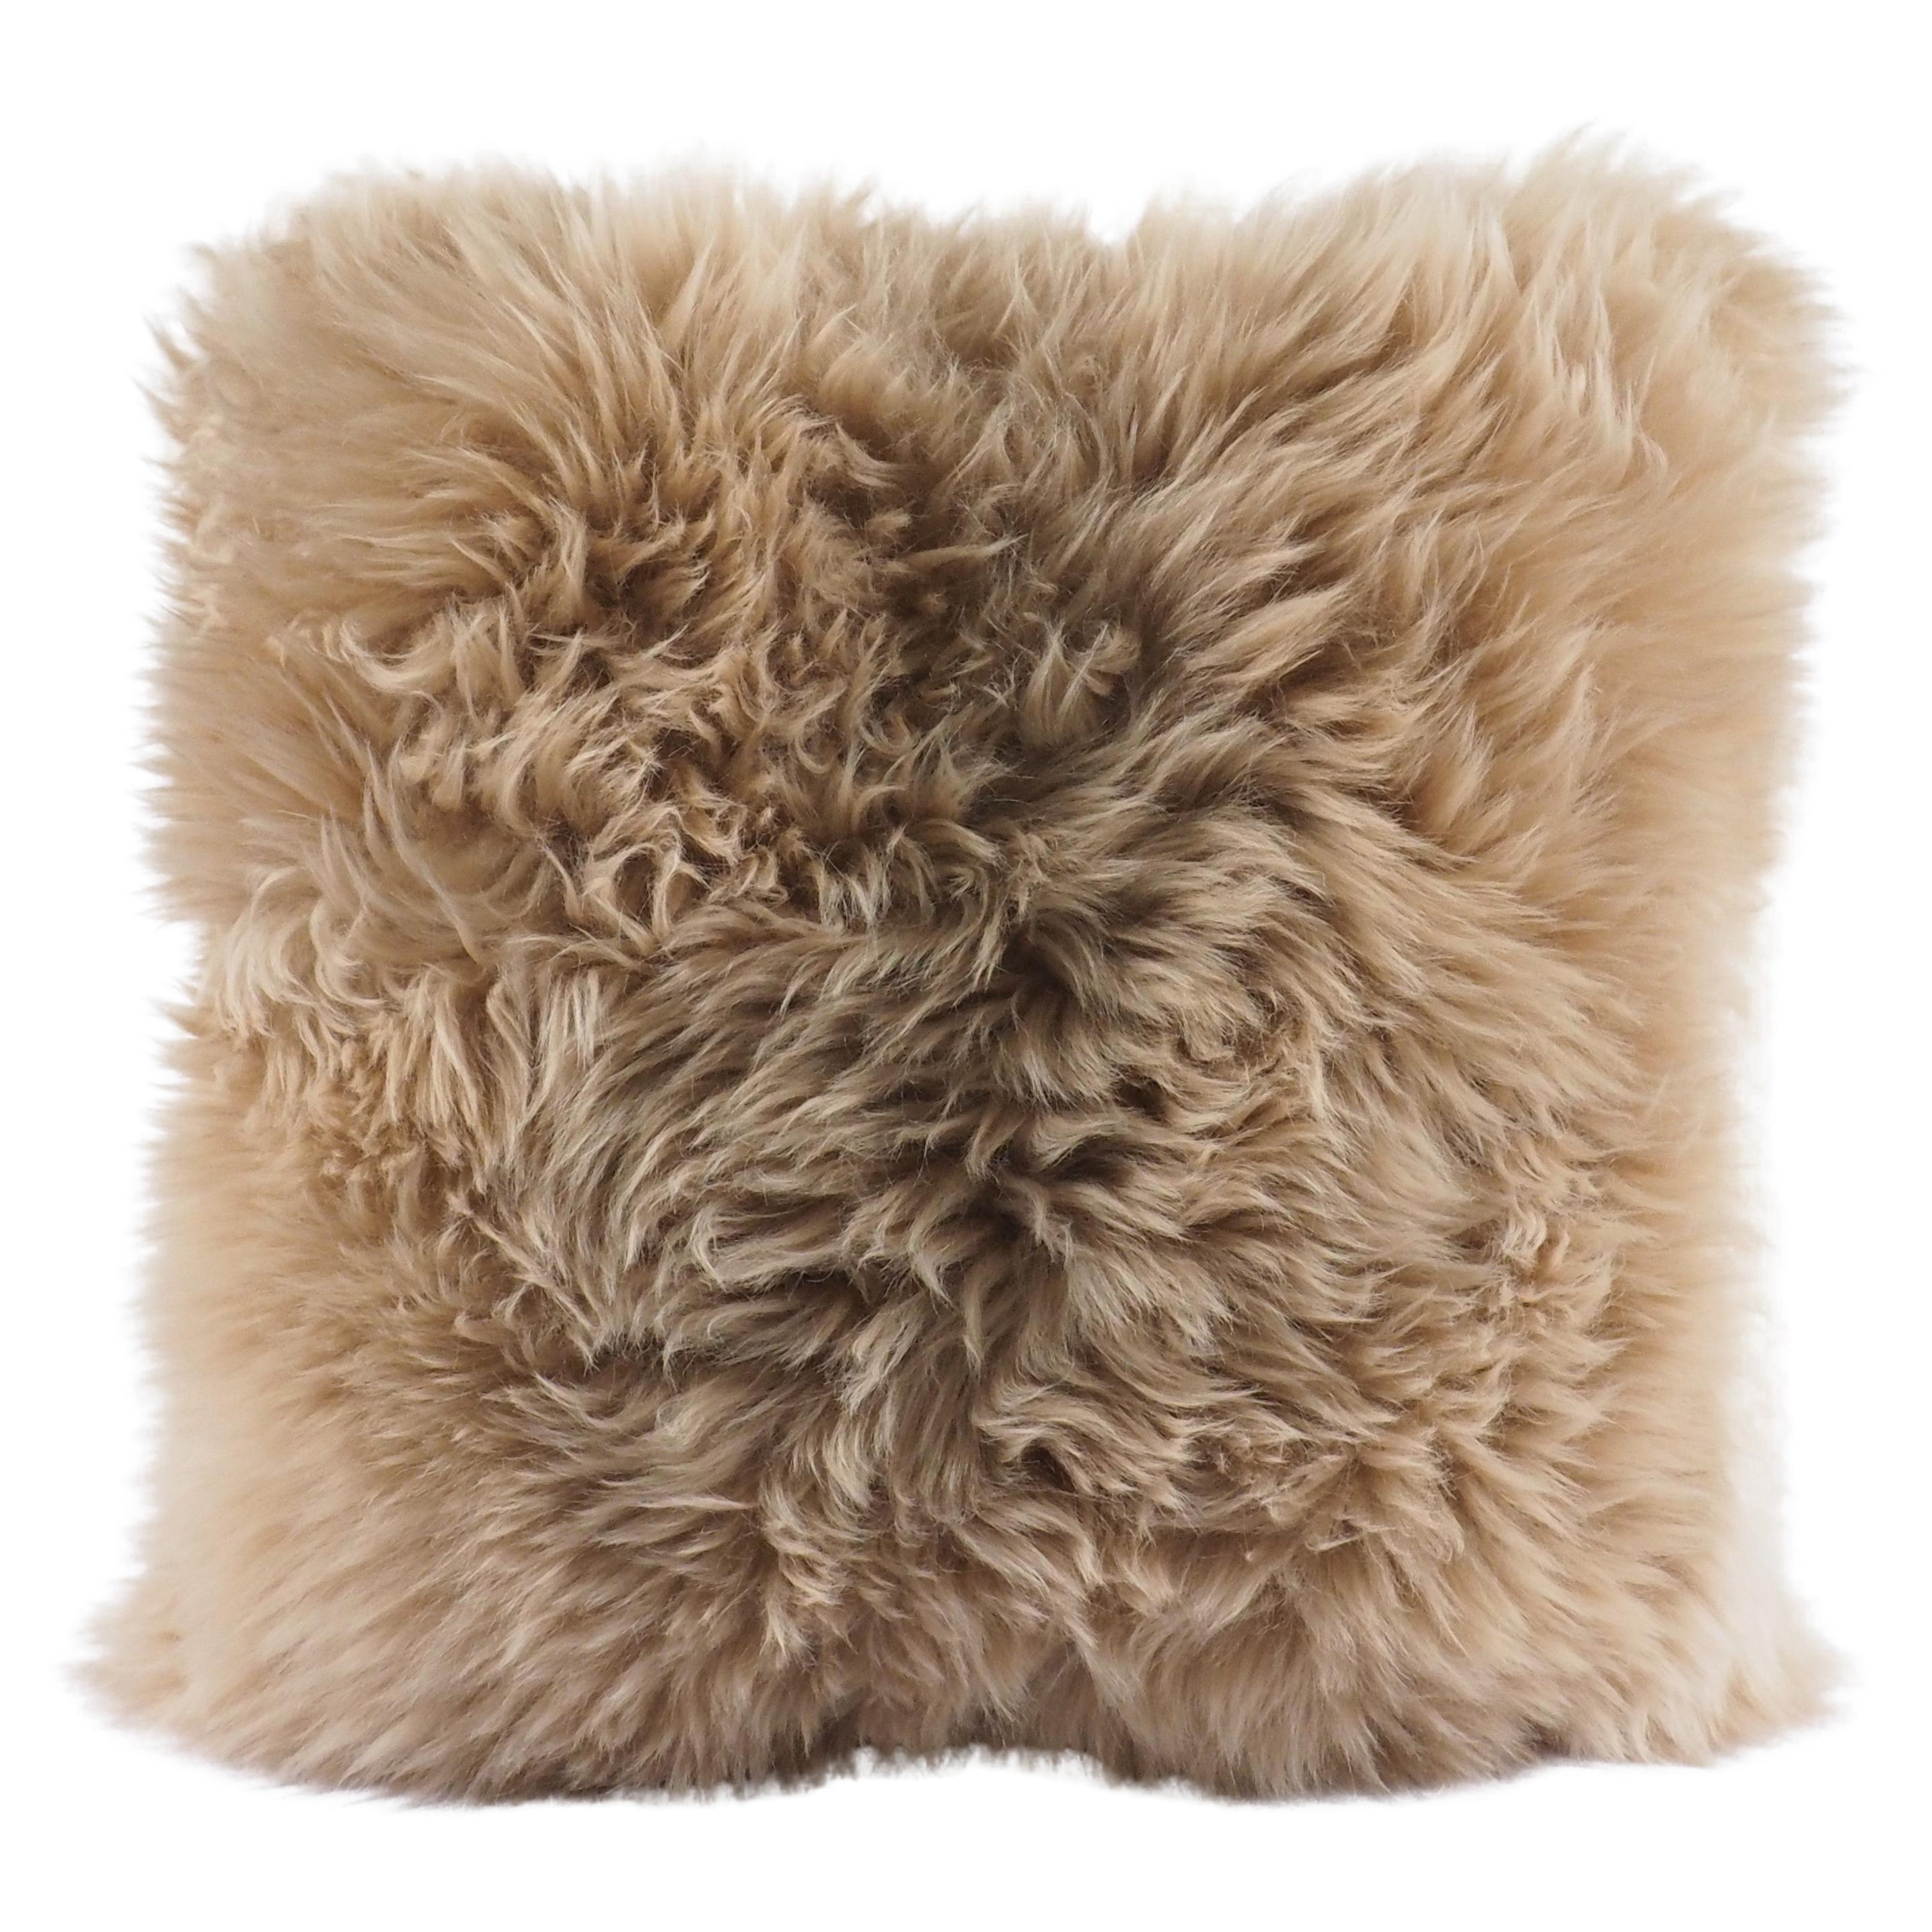 Camel Light Ollengo Shearling Sheepskin Pillow Fluffy Cushion by Muchi Decor For Sale